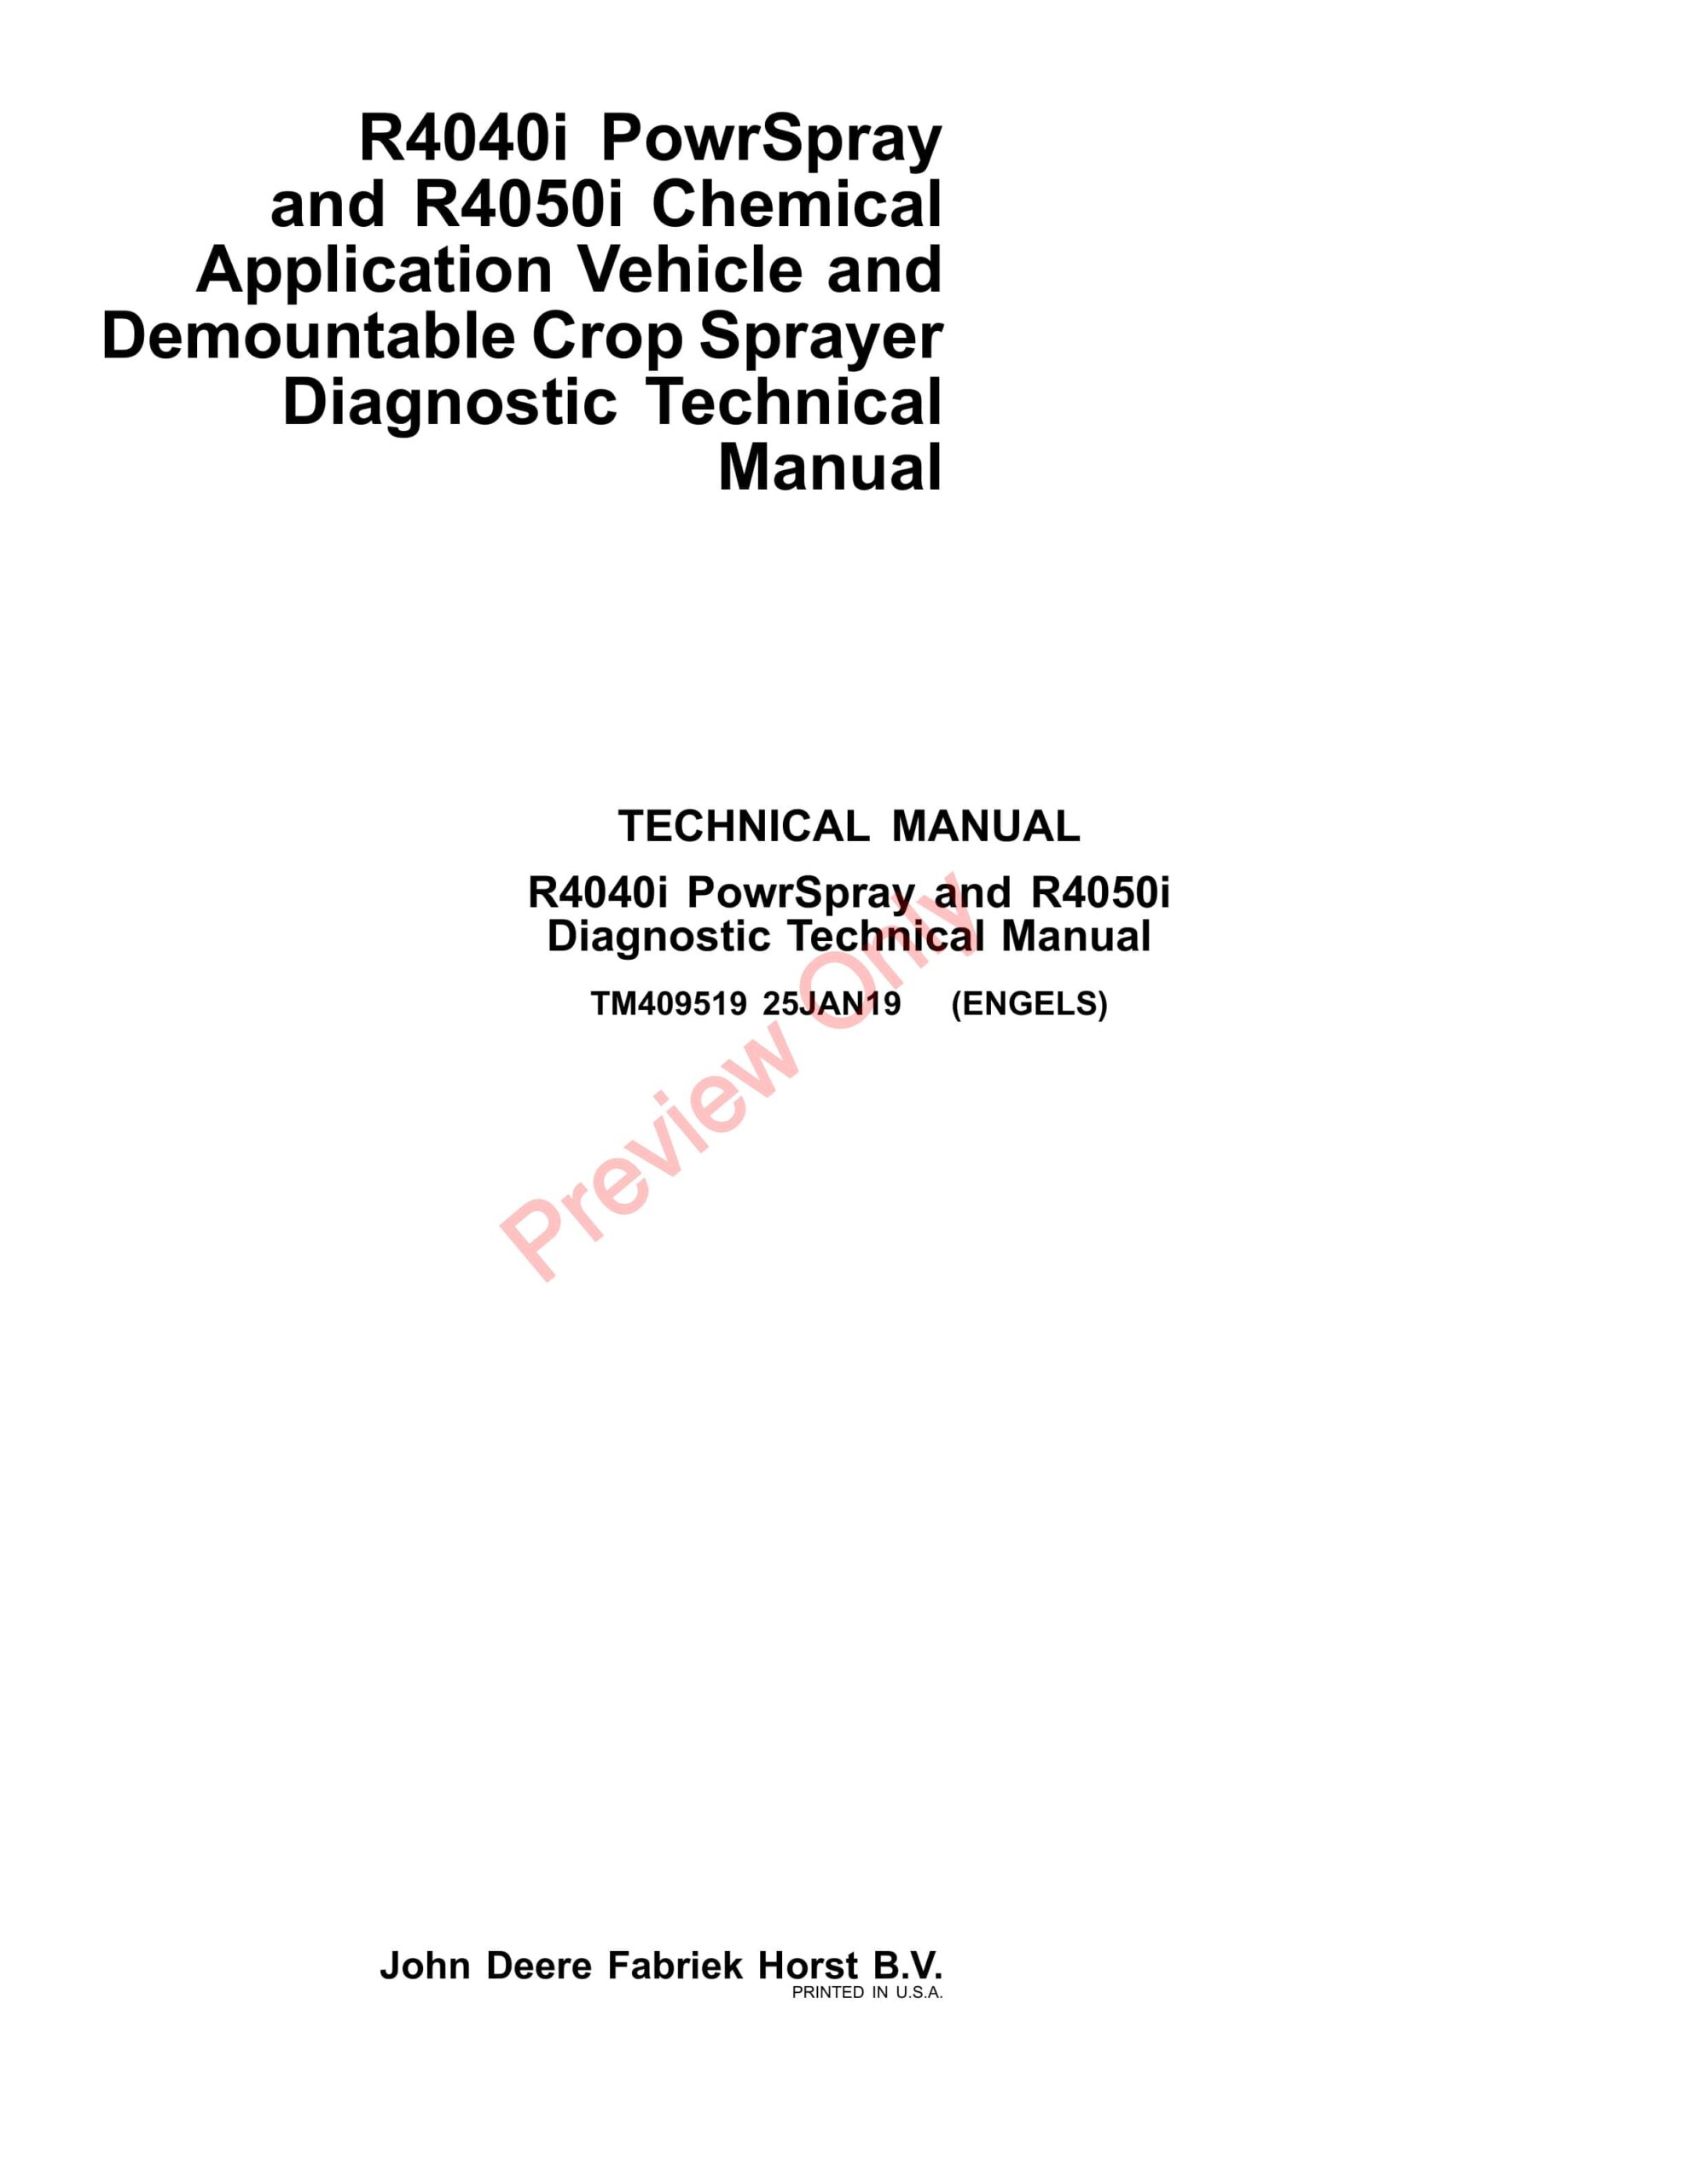 John Deere R4040i PowrSpray and R4050i Chemical ApplicationVehicle and Demountable Crop Sprayers Diagnostic Technical Manual TM409519 25JAN19-1